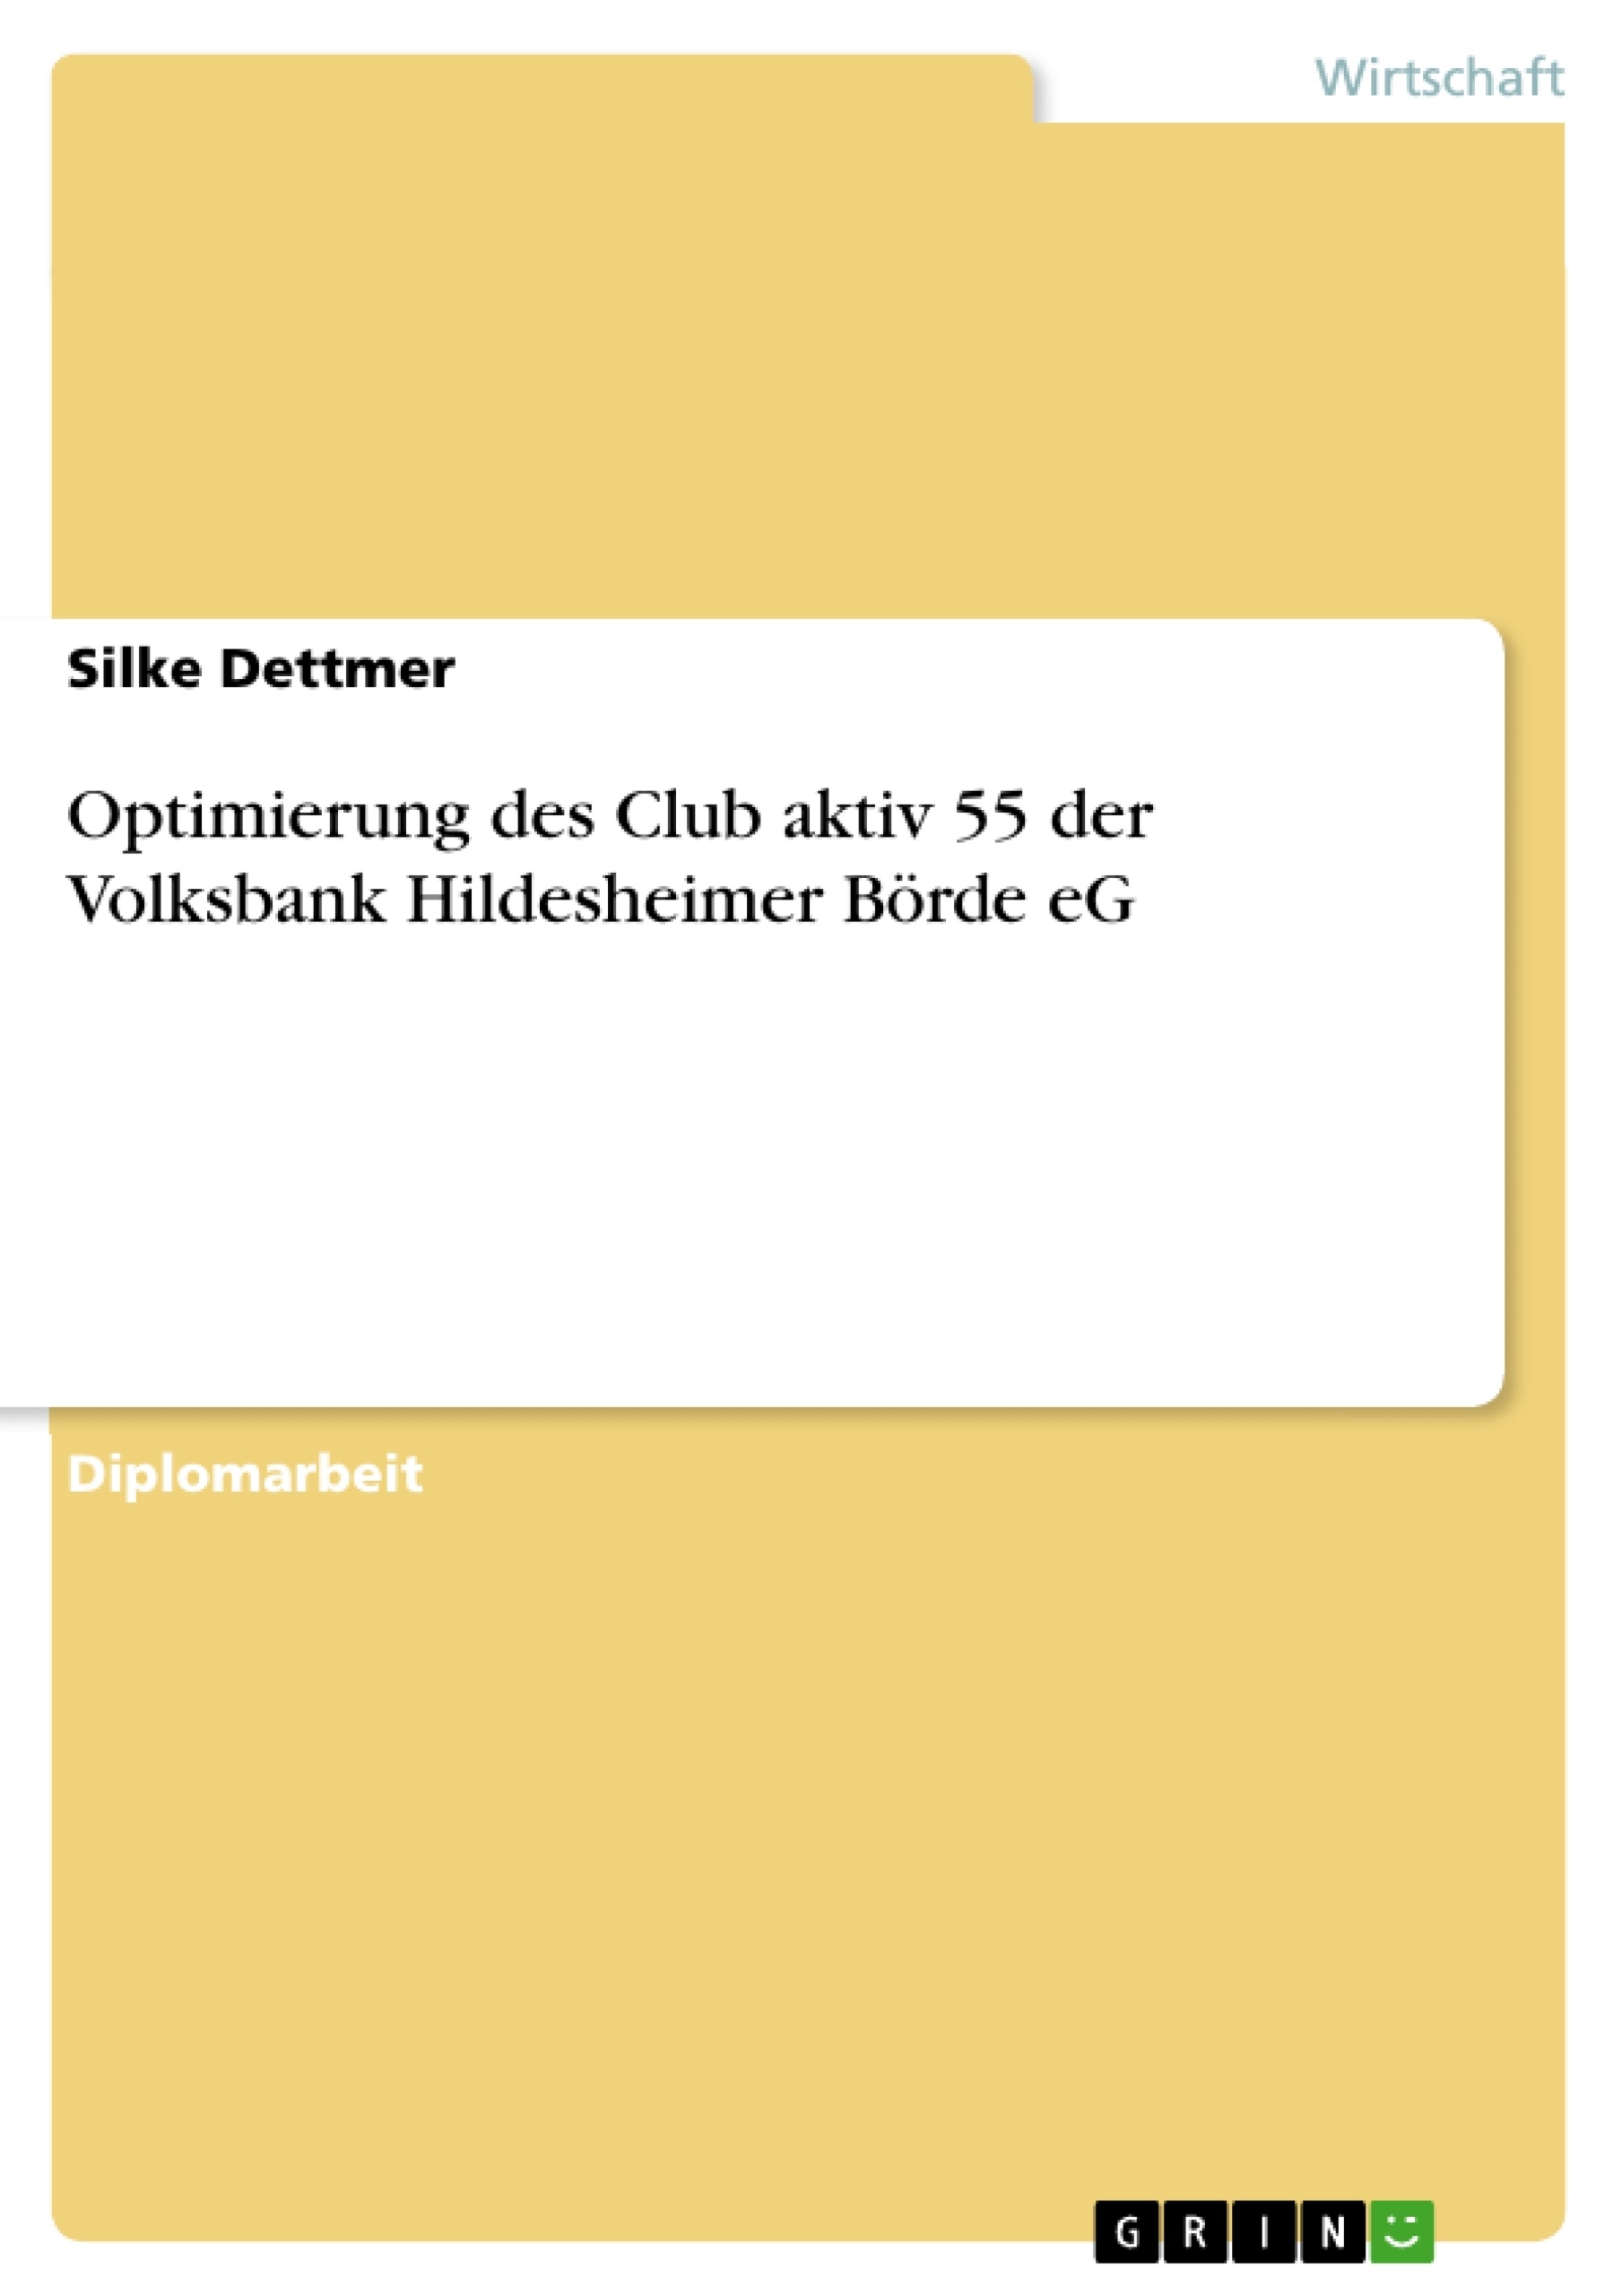 Titre: Optimierung des Club aktiv 55 der Volksbank Hildesheimer Börde eG